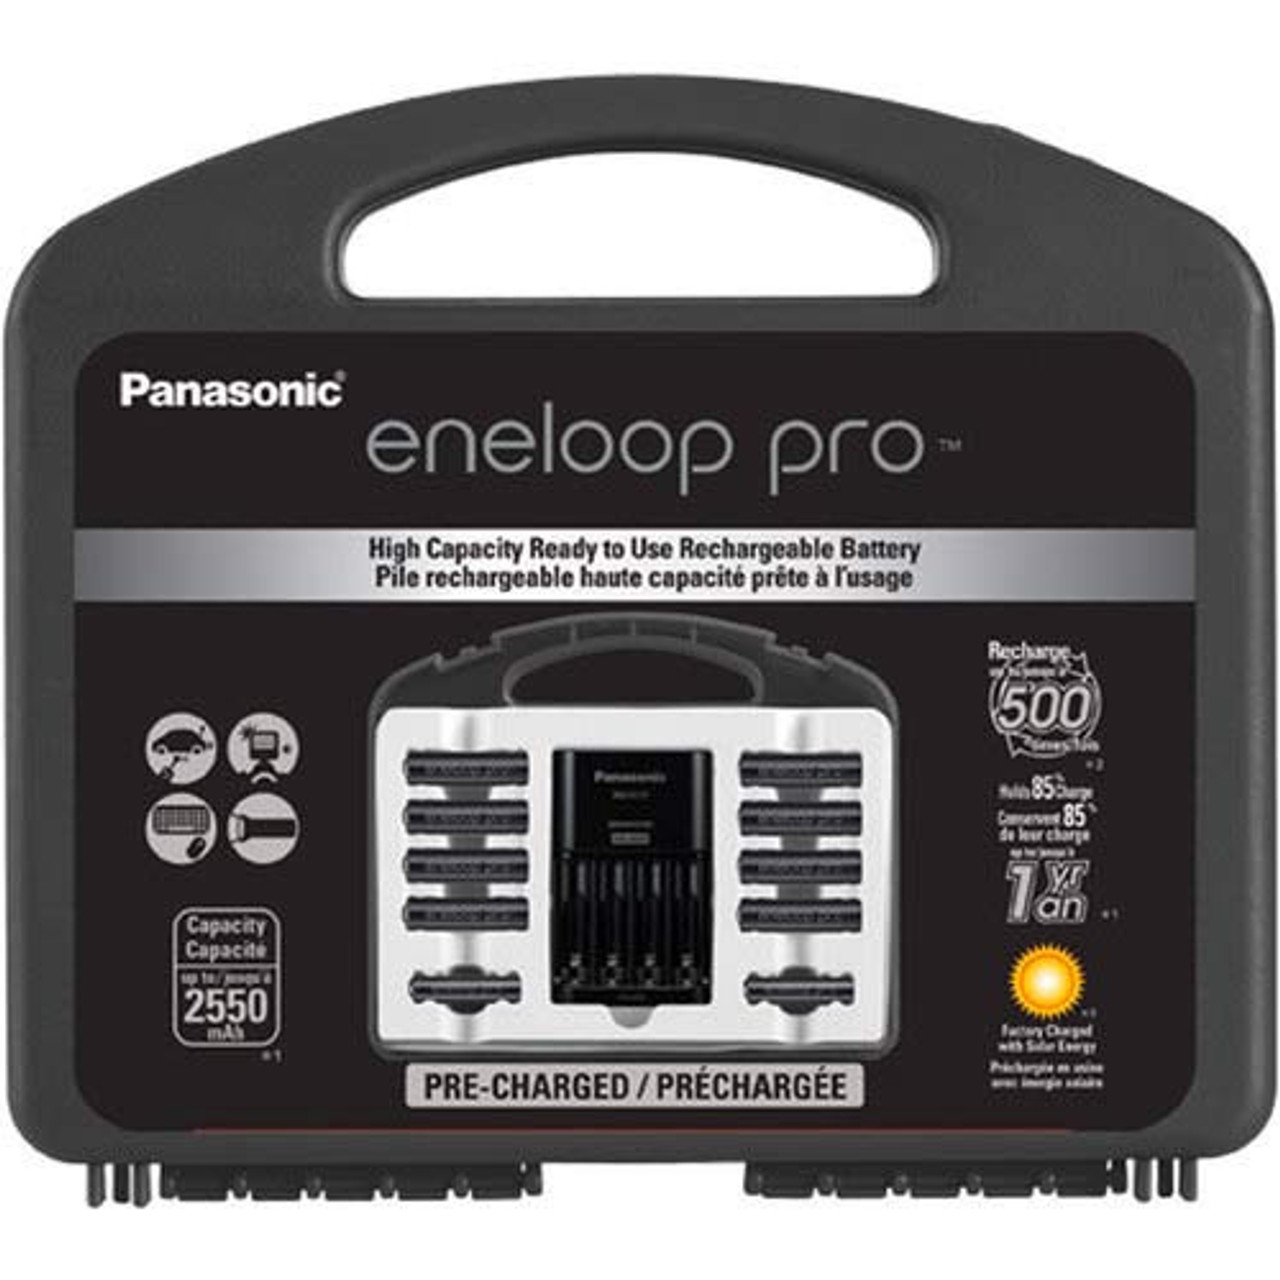 Panasonic Eneloop Pro AA 4 Pack Batteries & Charger